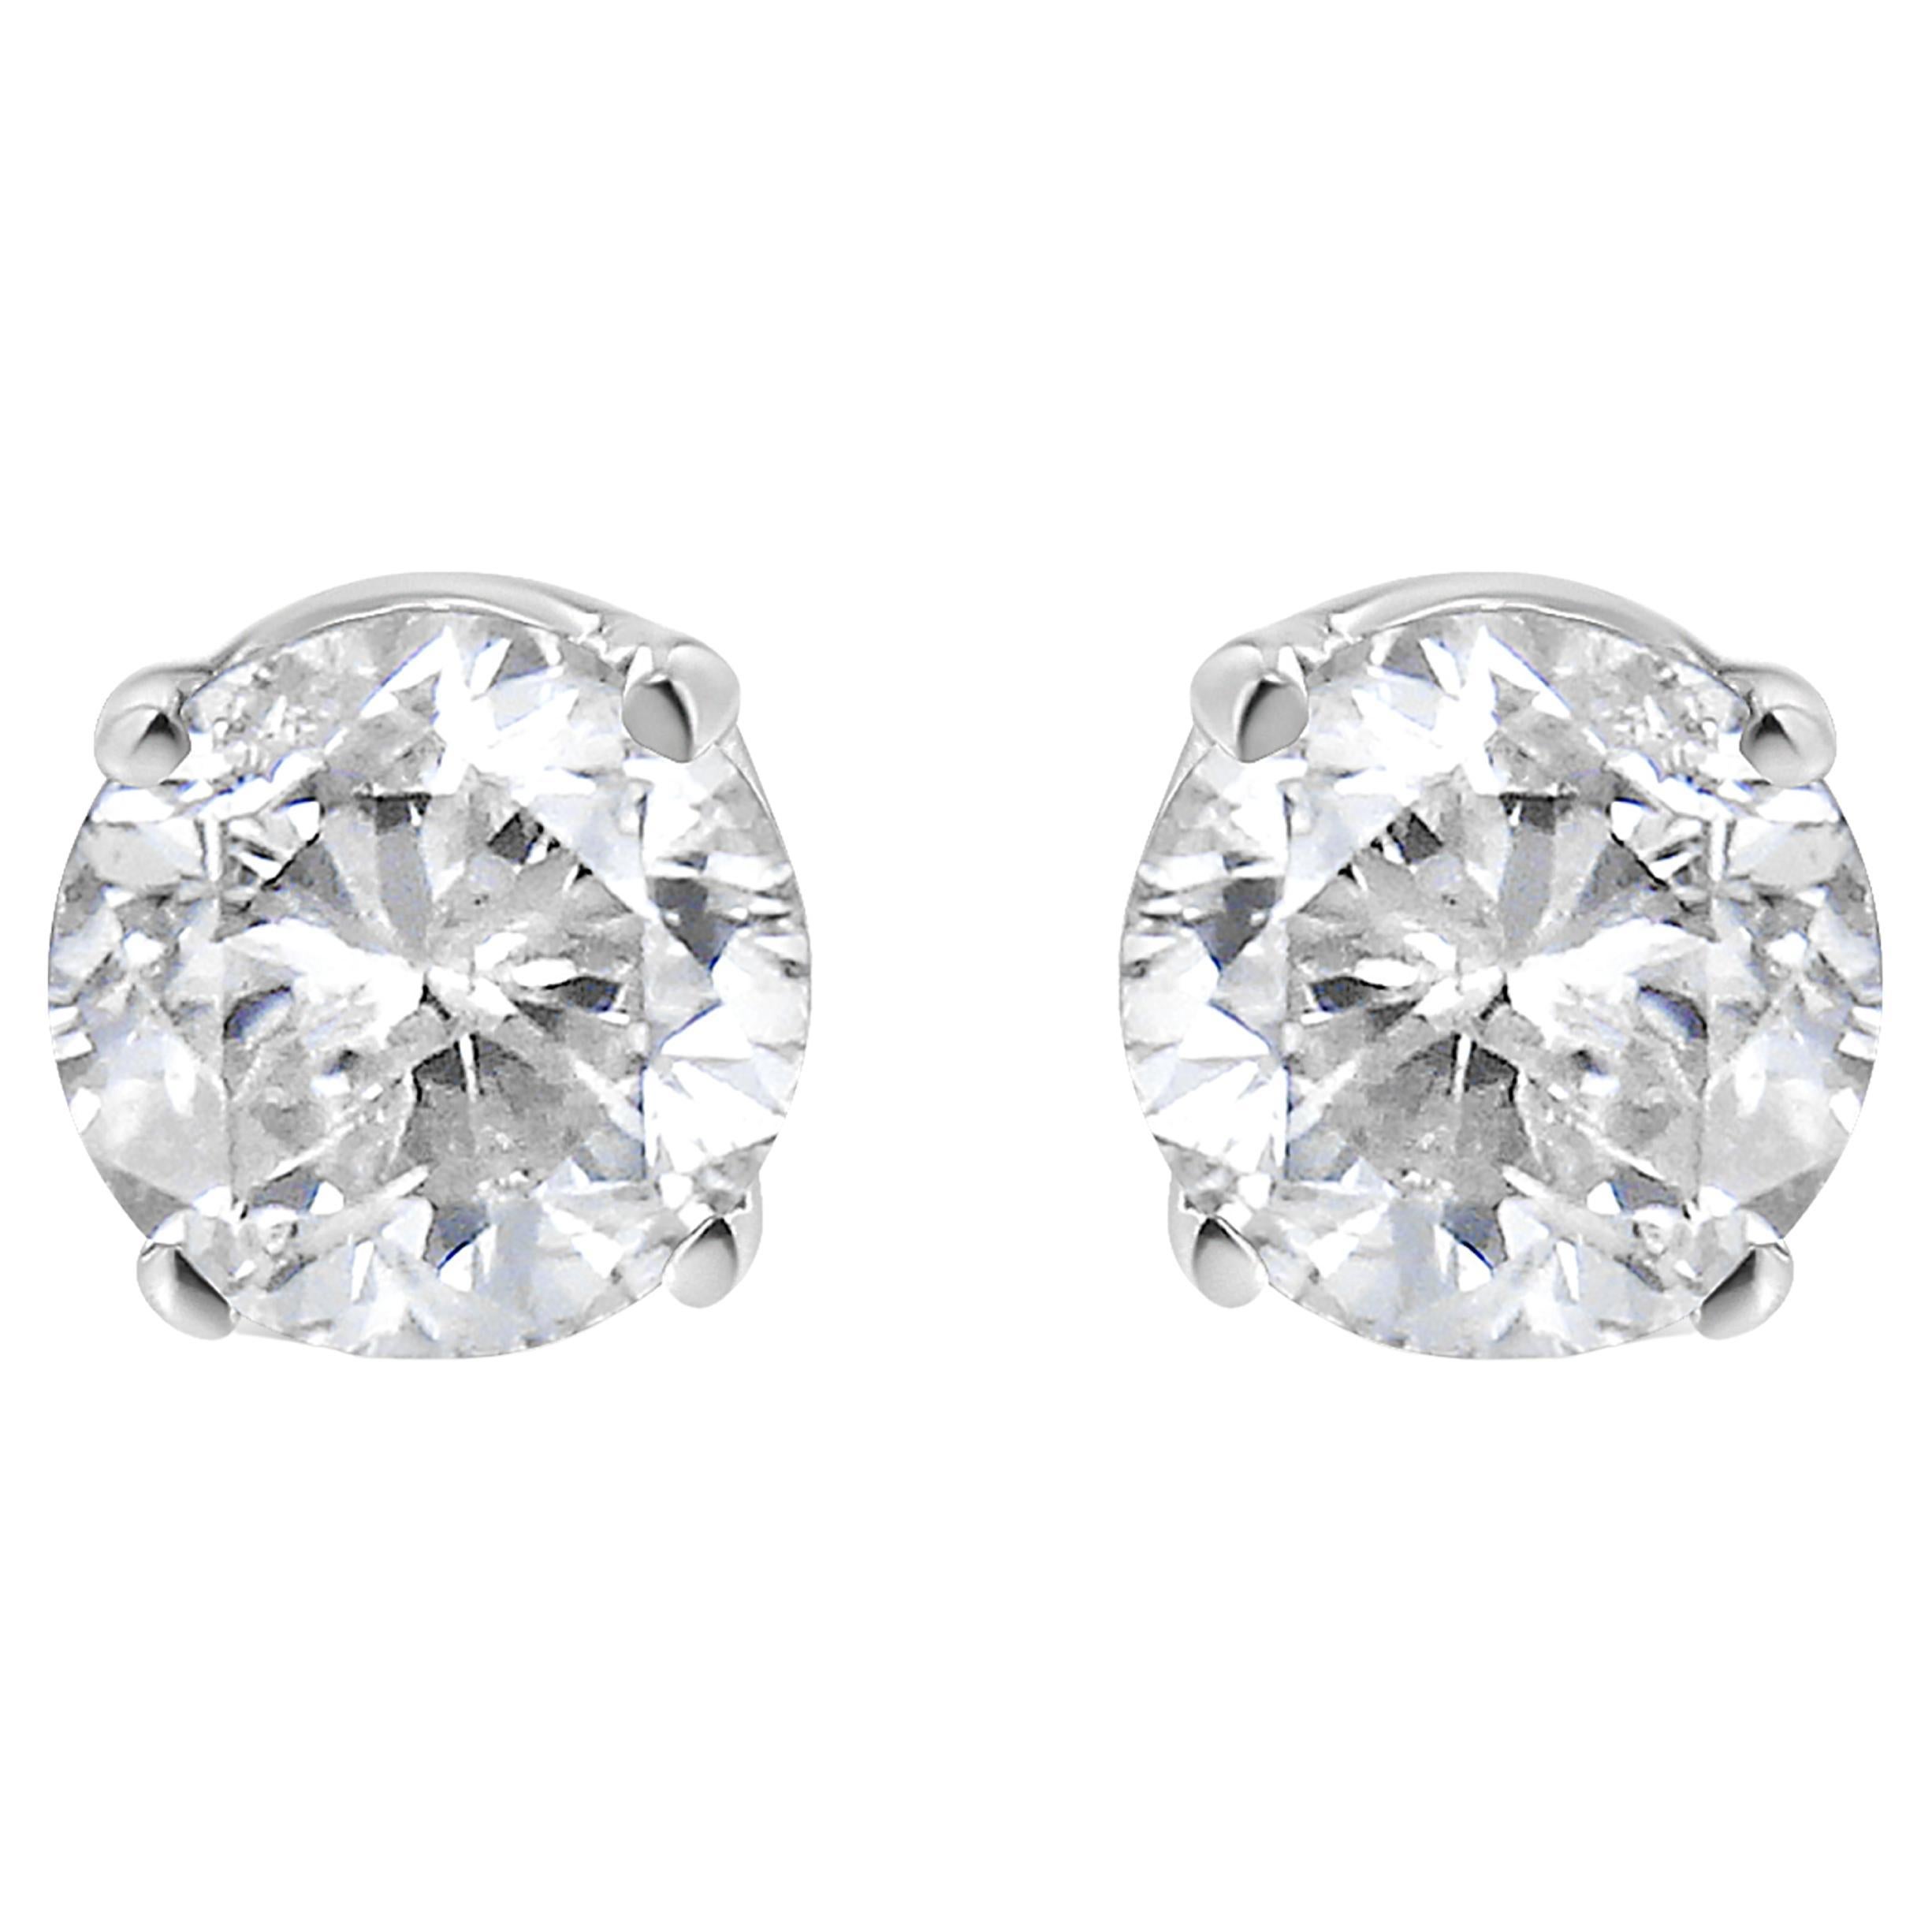 14K White Gold 1.0 Carat Diamond Solitaire Stud Earrings